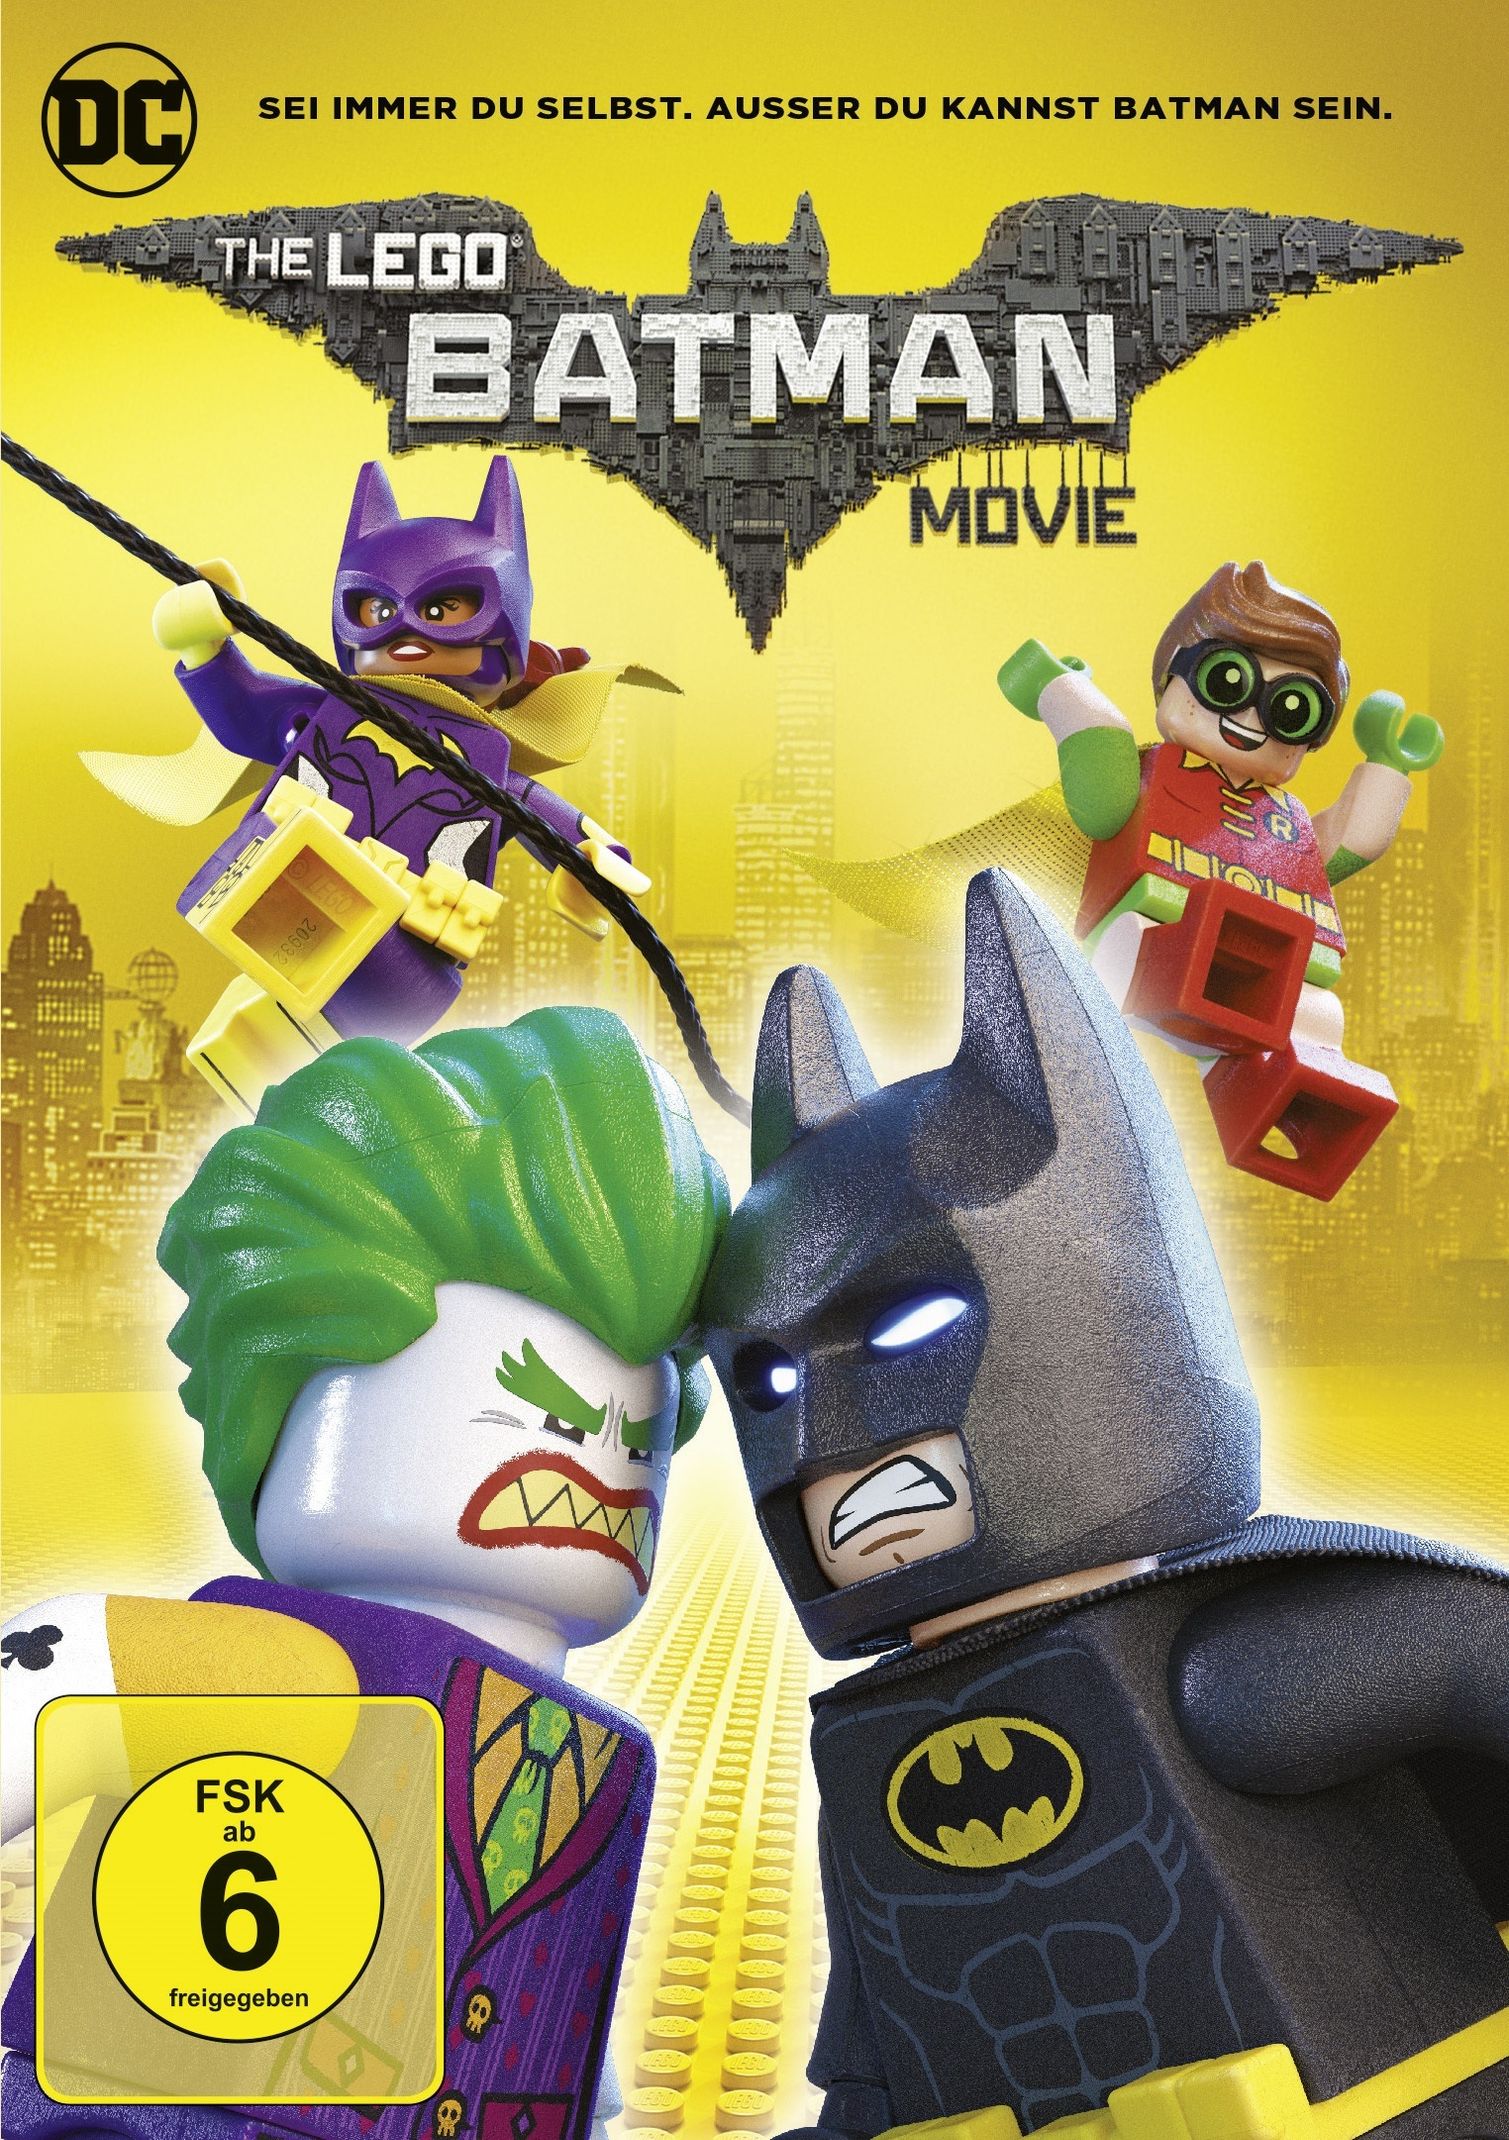 The LEGO Batman Movie DVD jetzt bei Weltbild.de online bestellen